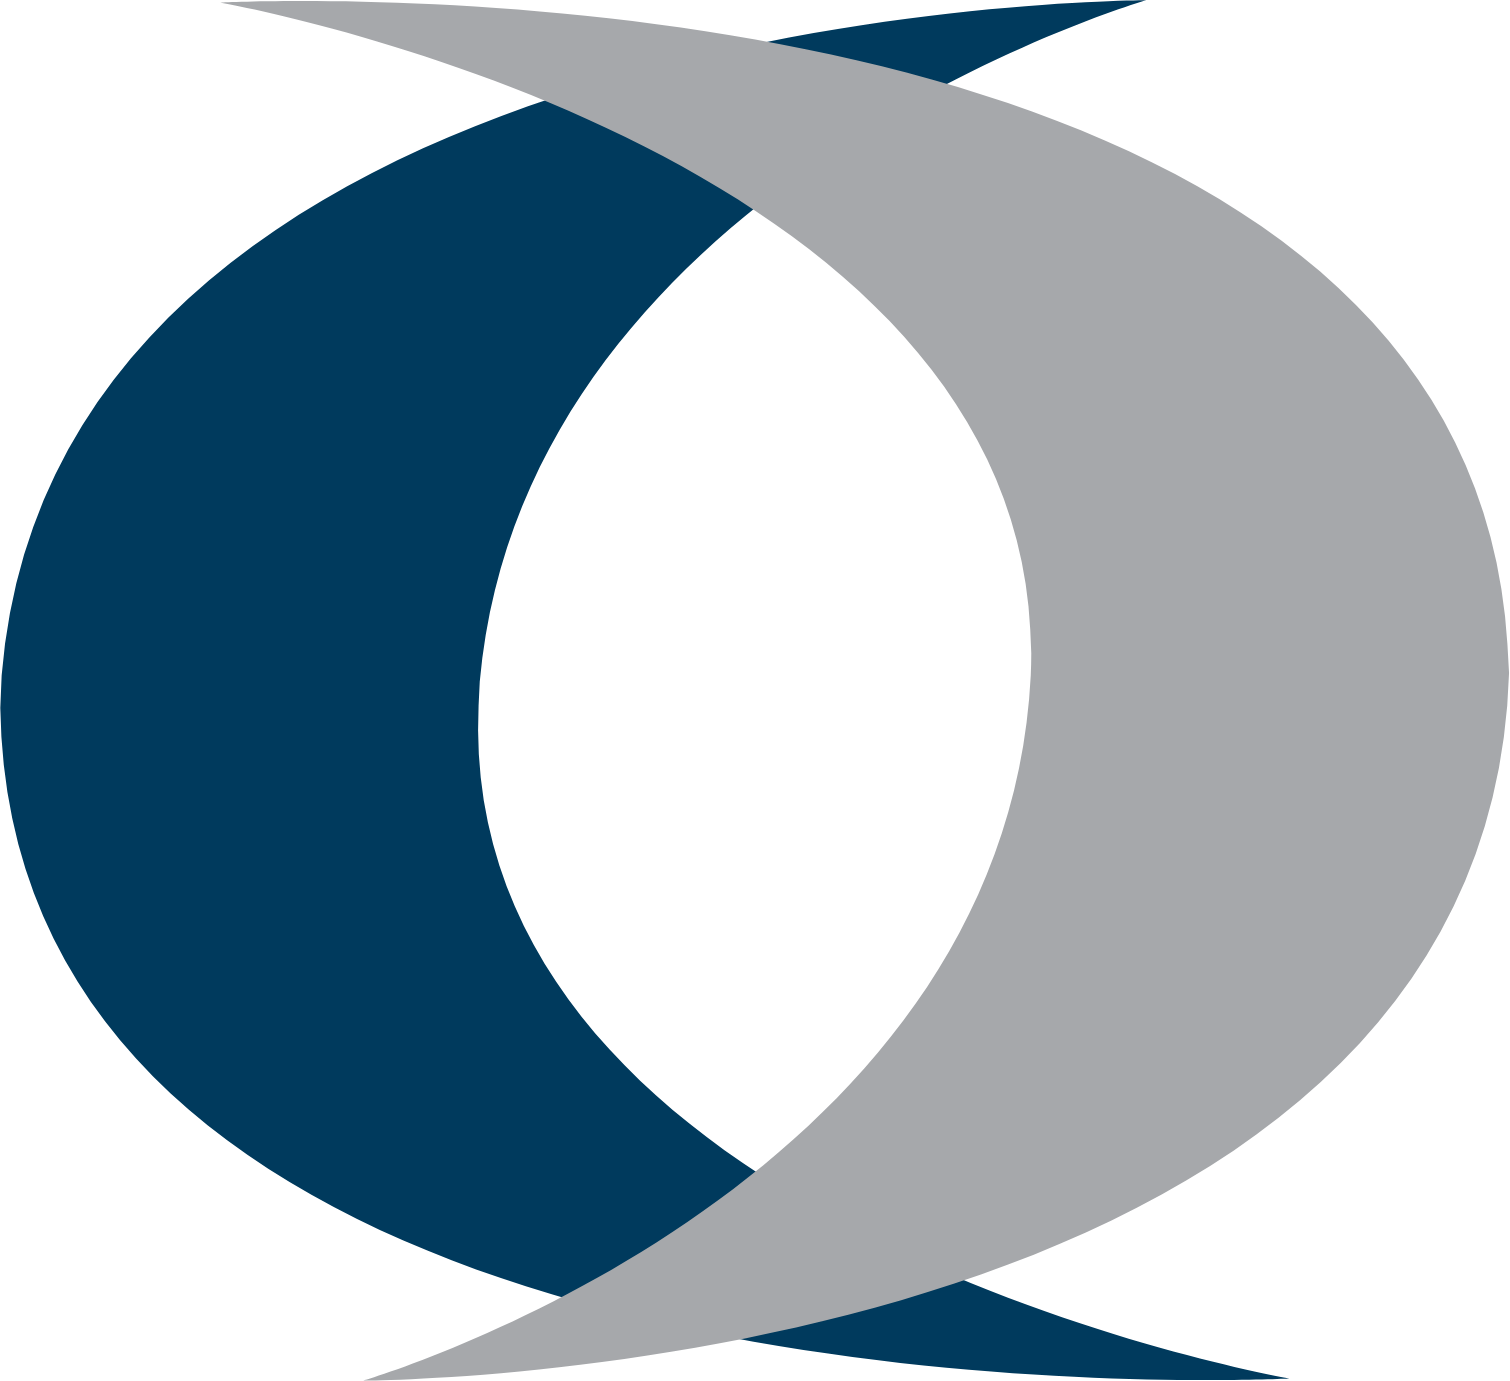 Hallmark Financial Services logo (PNG transparent)